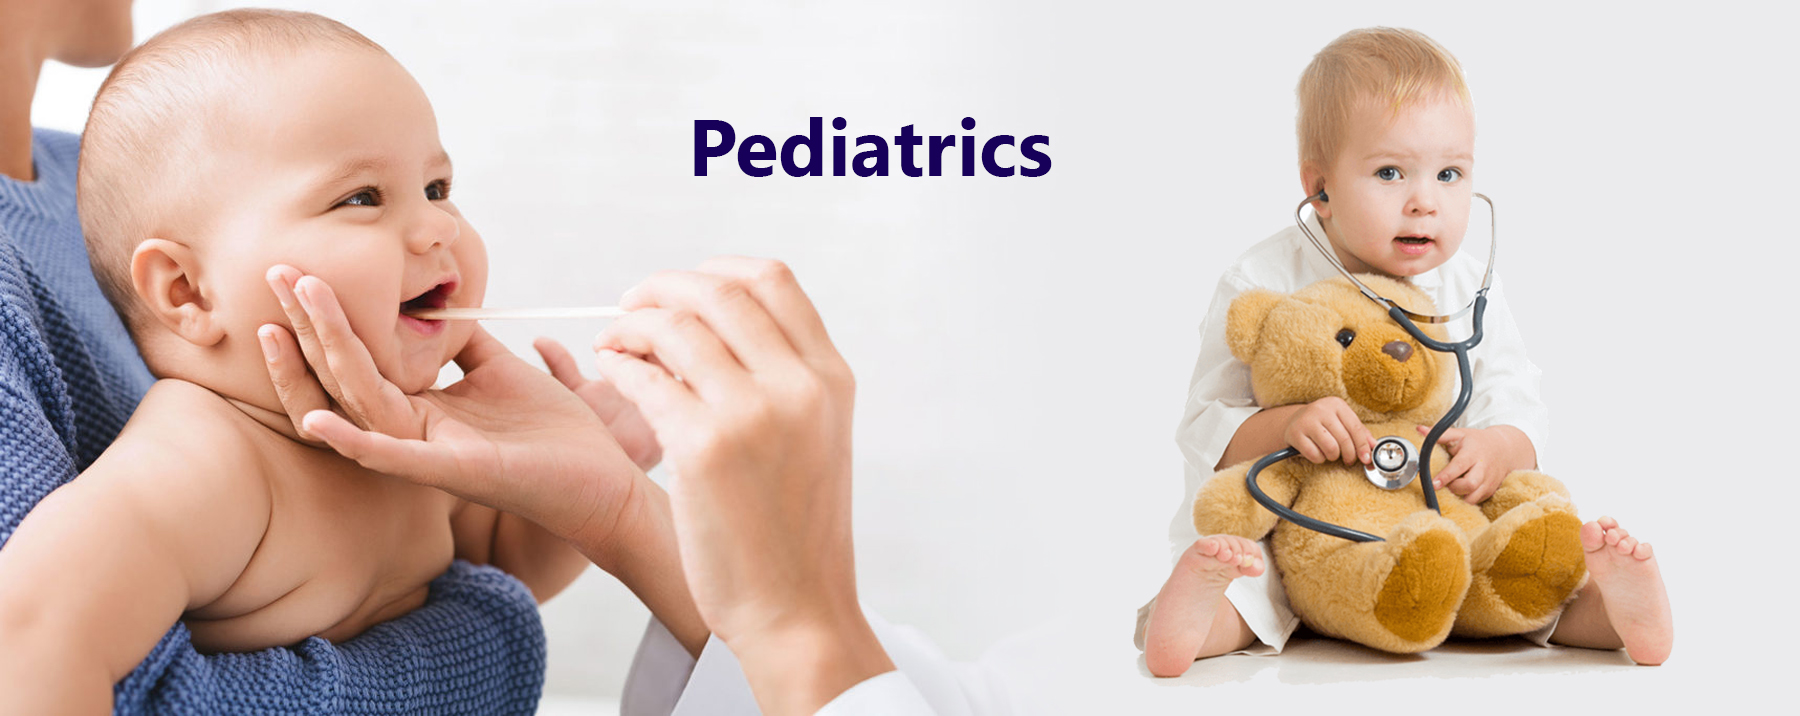 Best Pediatrics Hospital